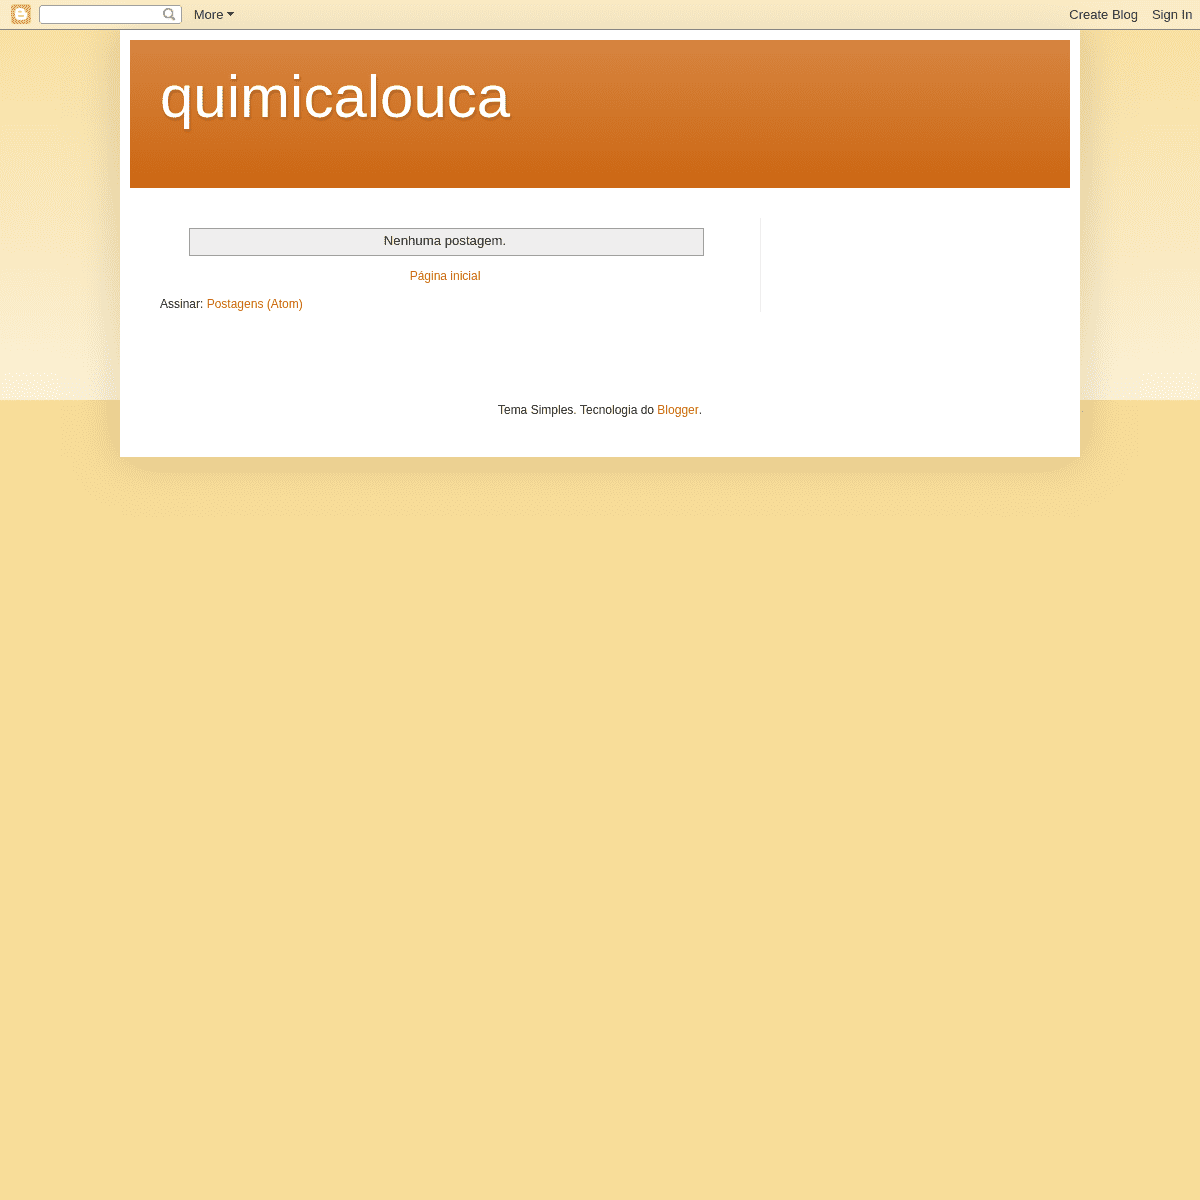 A complete backup of ufrbquimica.blogspot.com